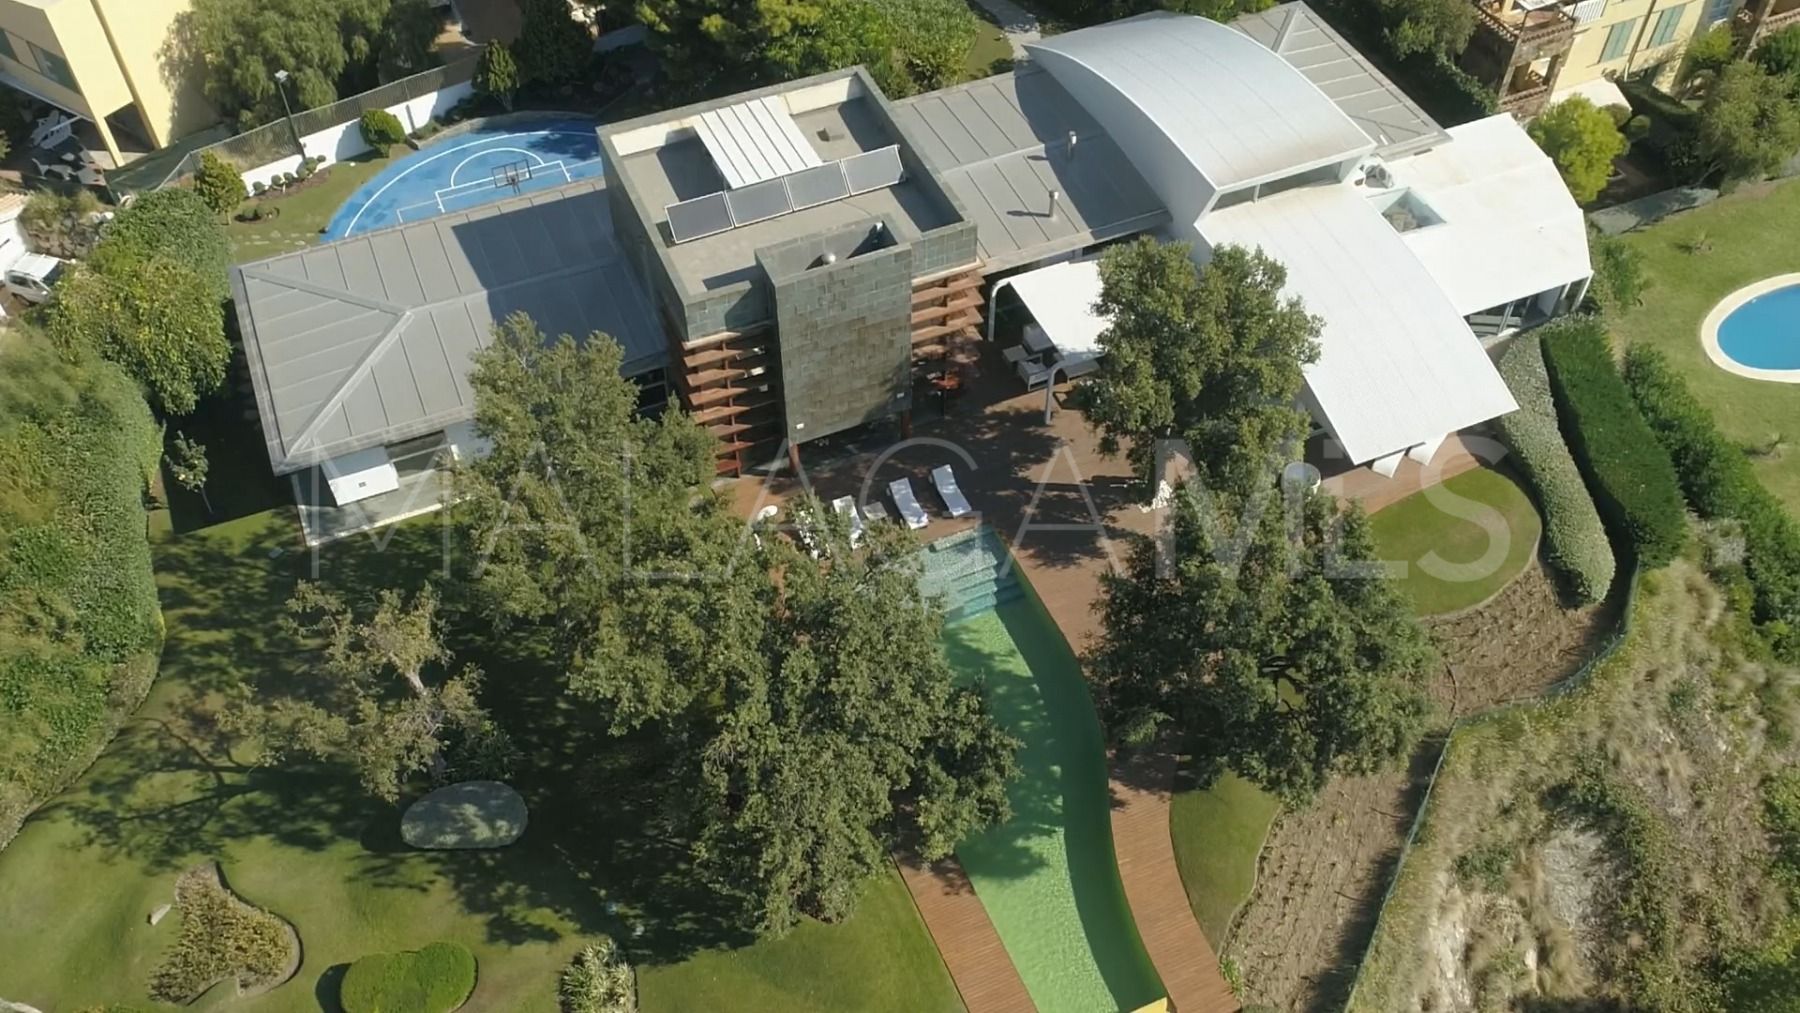 Villa for sale with 5 bedrooms in La Capellania